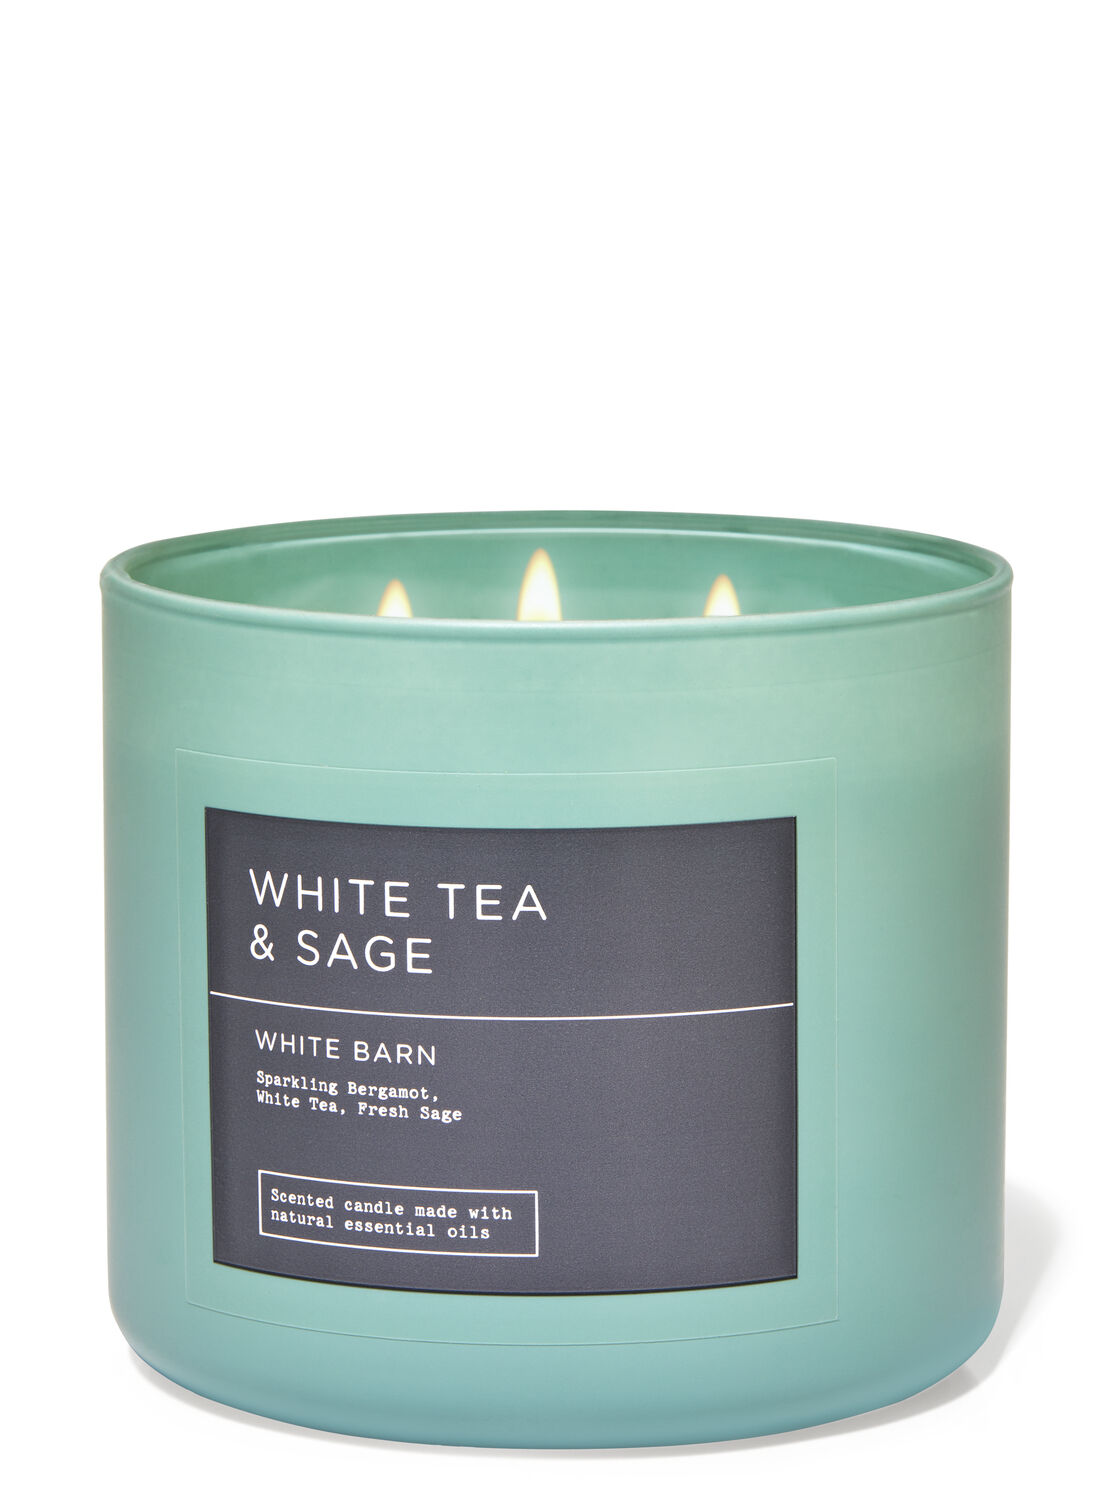 Bath Body Works WHITE TEA & SAGE 3-wick Candle Large 14.5 oz White Barn